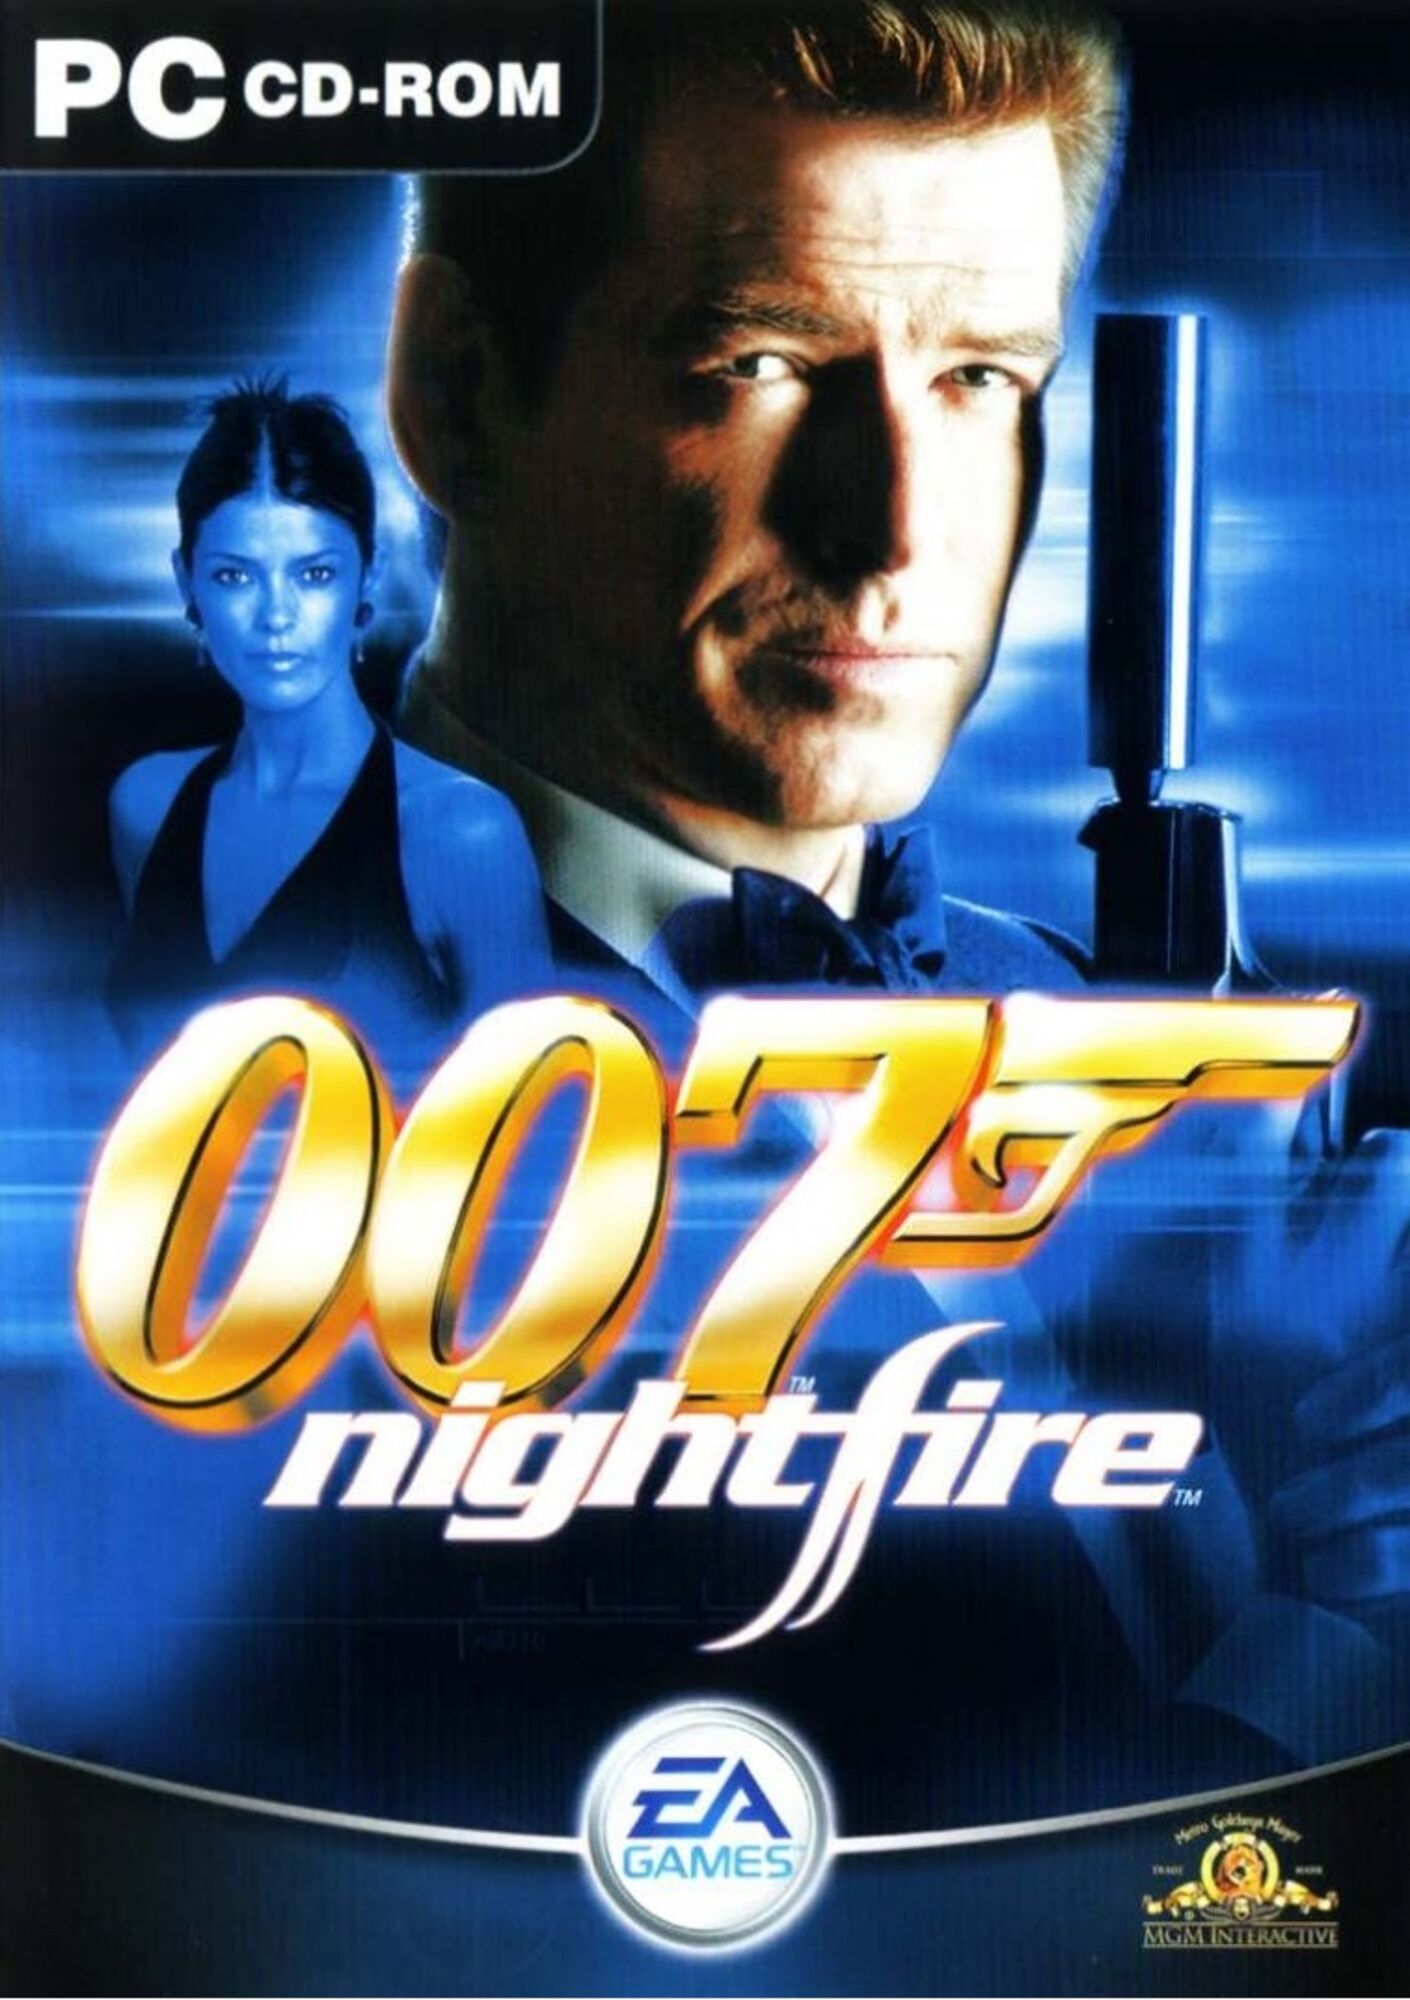 james bond 007 nightfire cheats pc